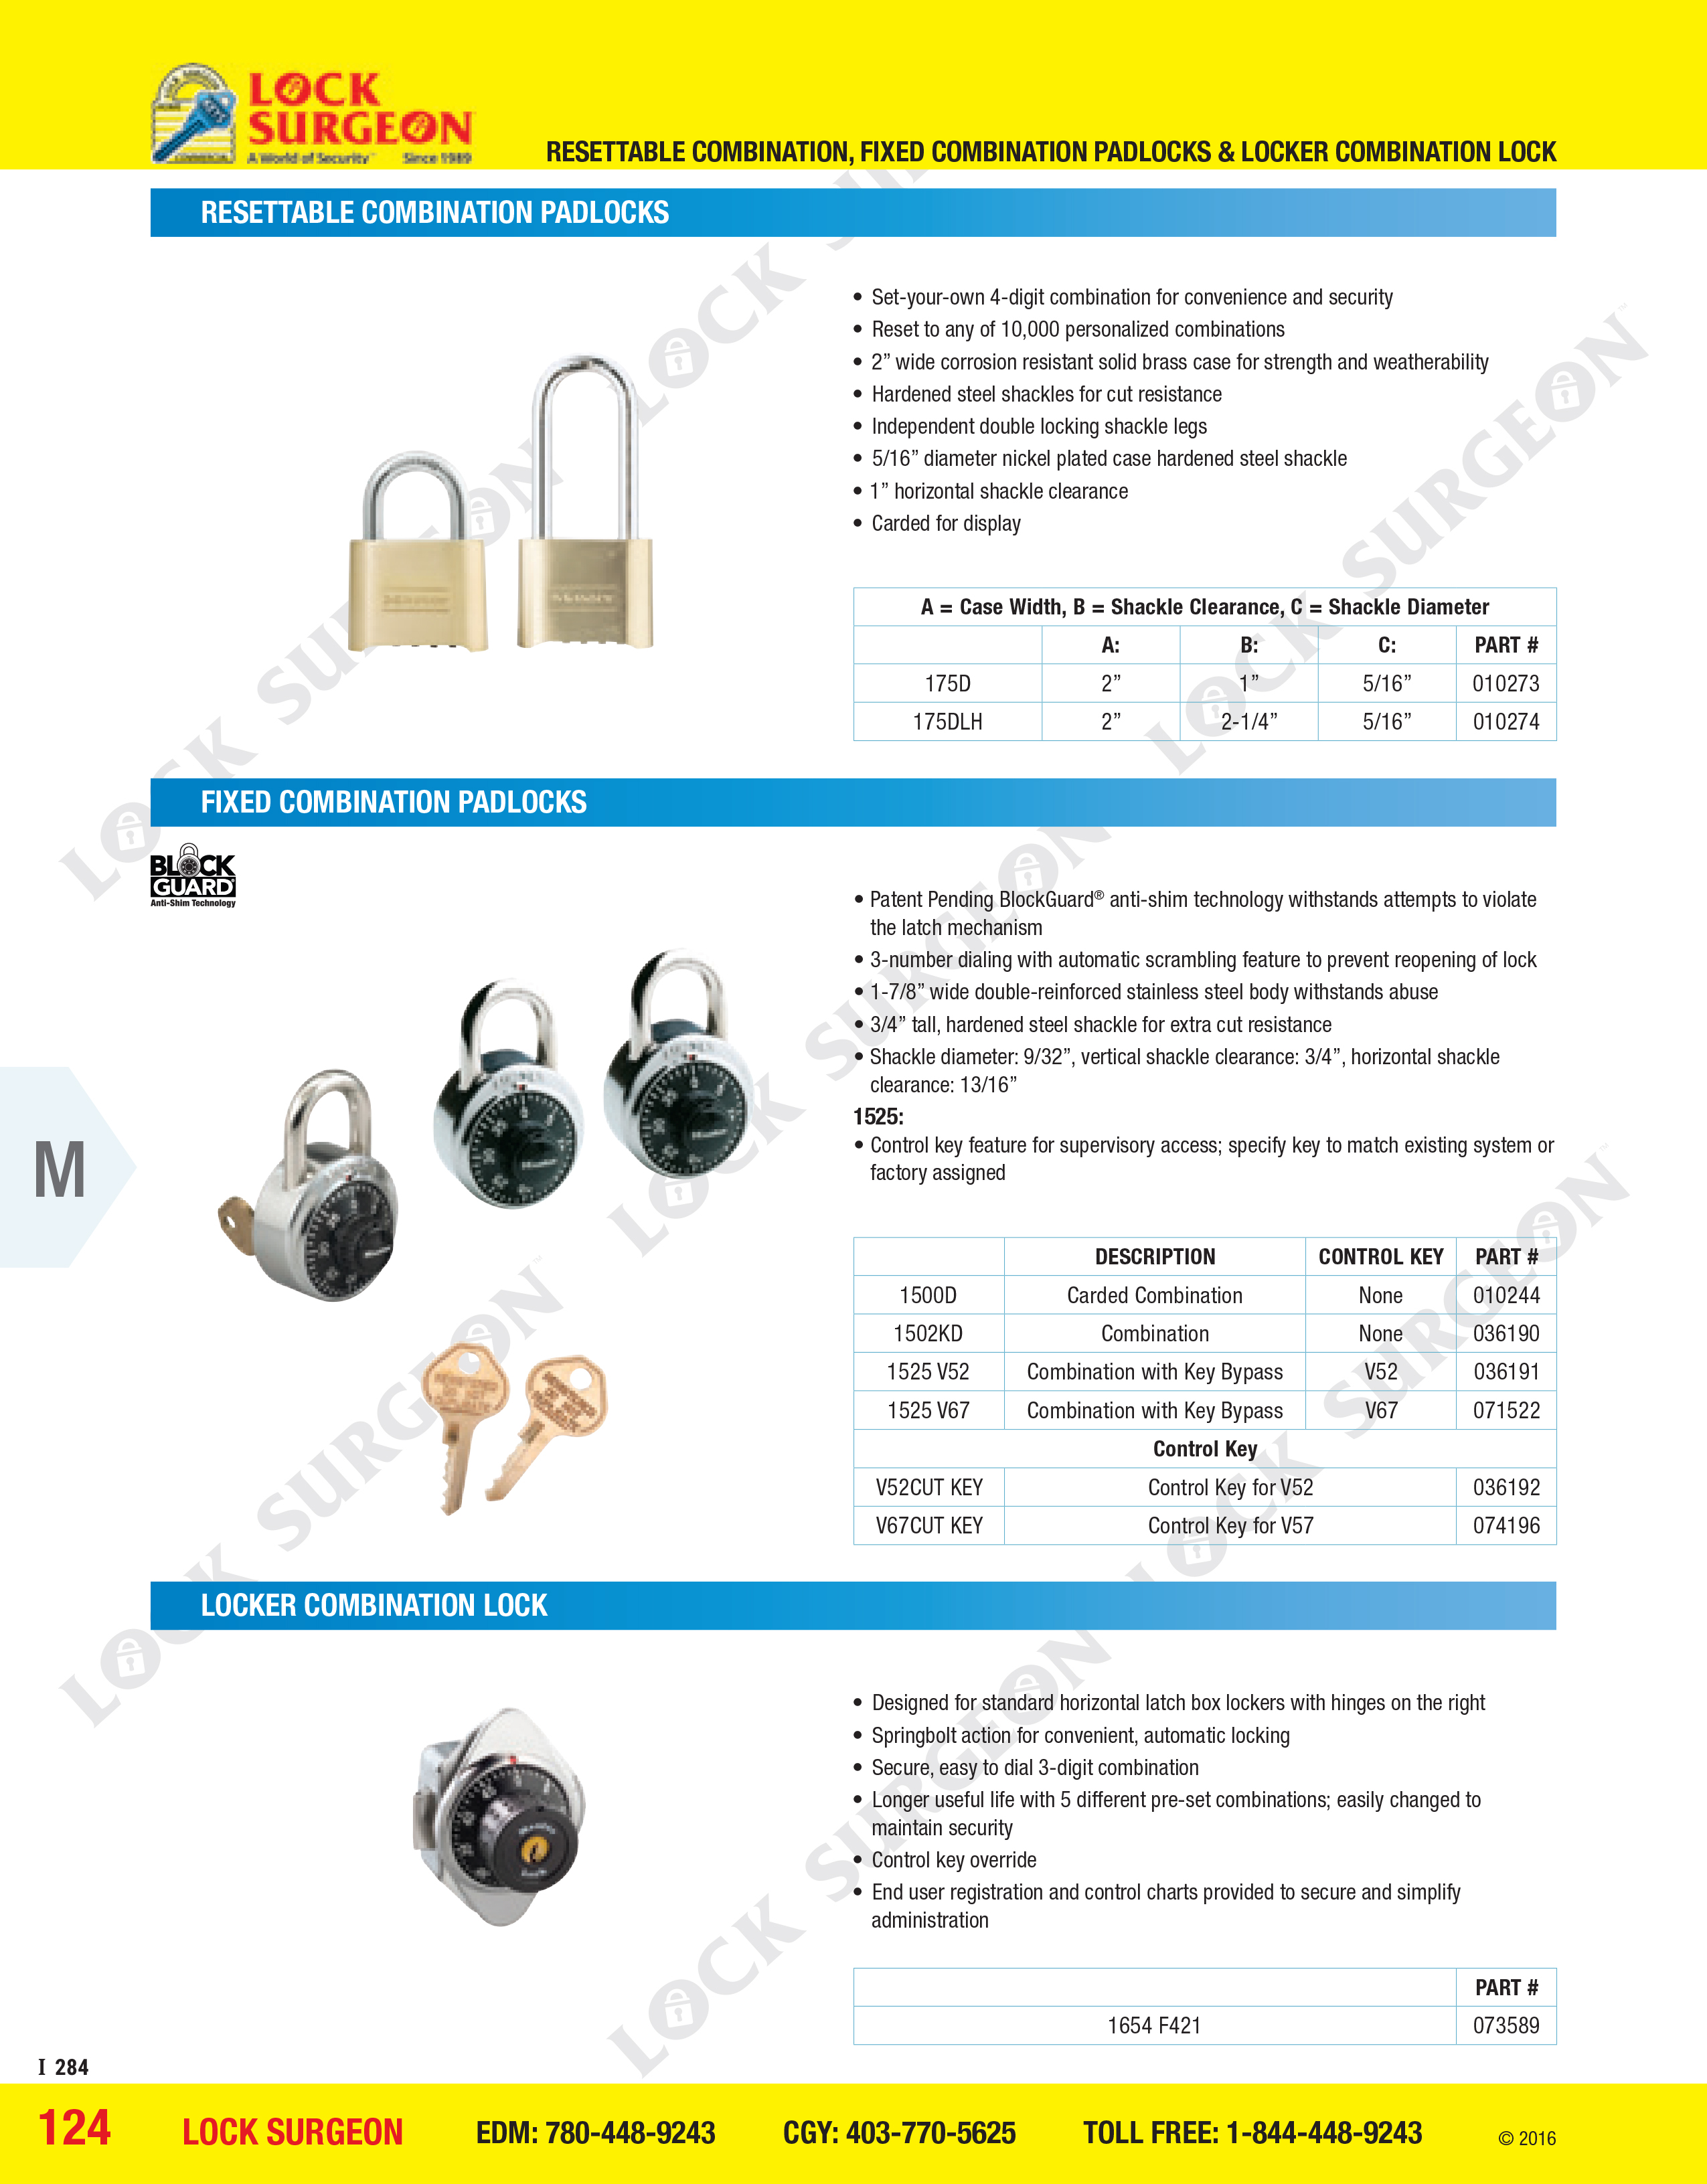 Master Lock Resettable combination padlocks, fixed combination padlocks, locker combination locks